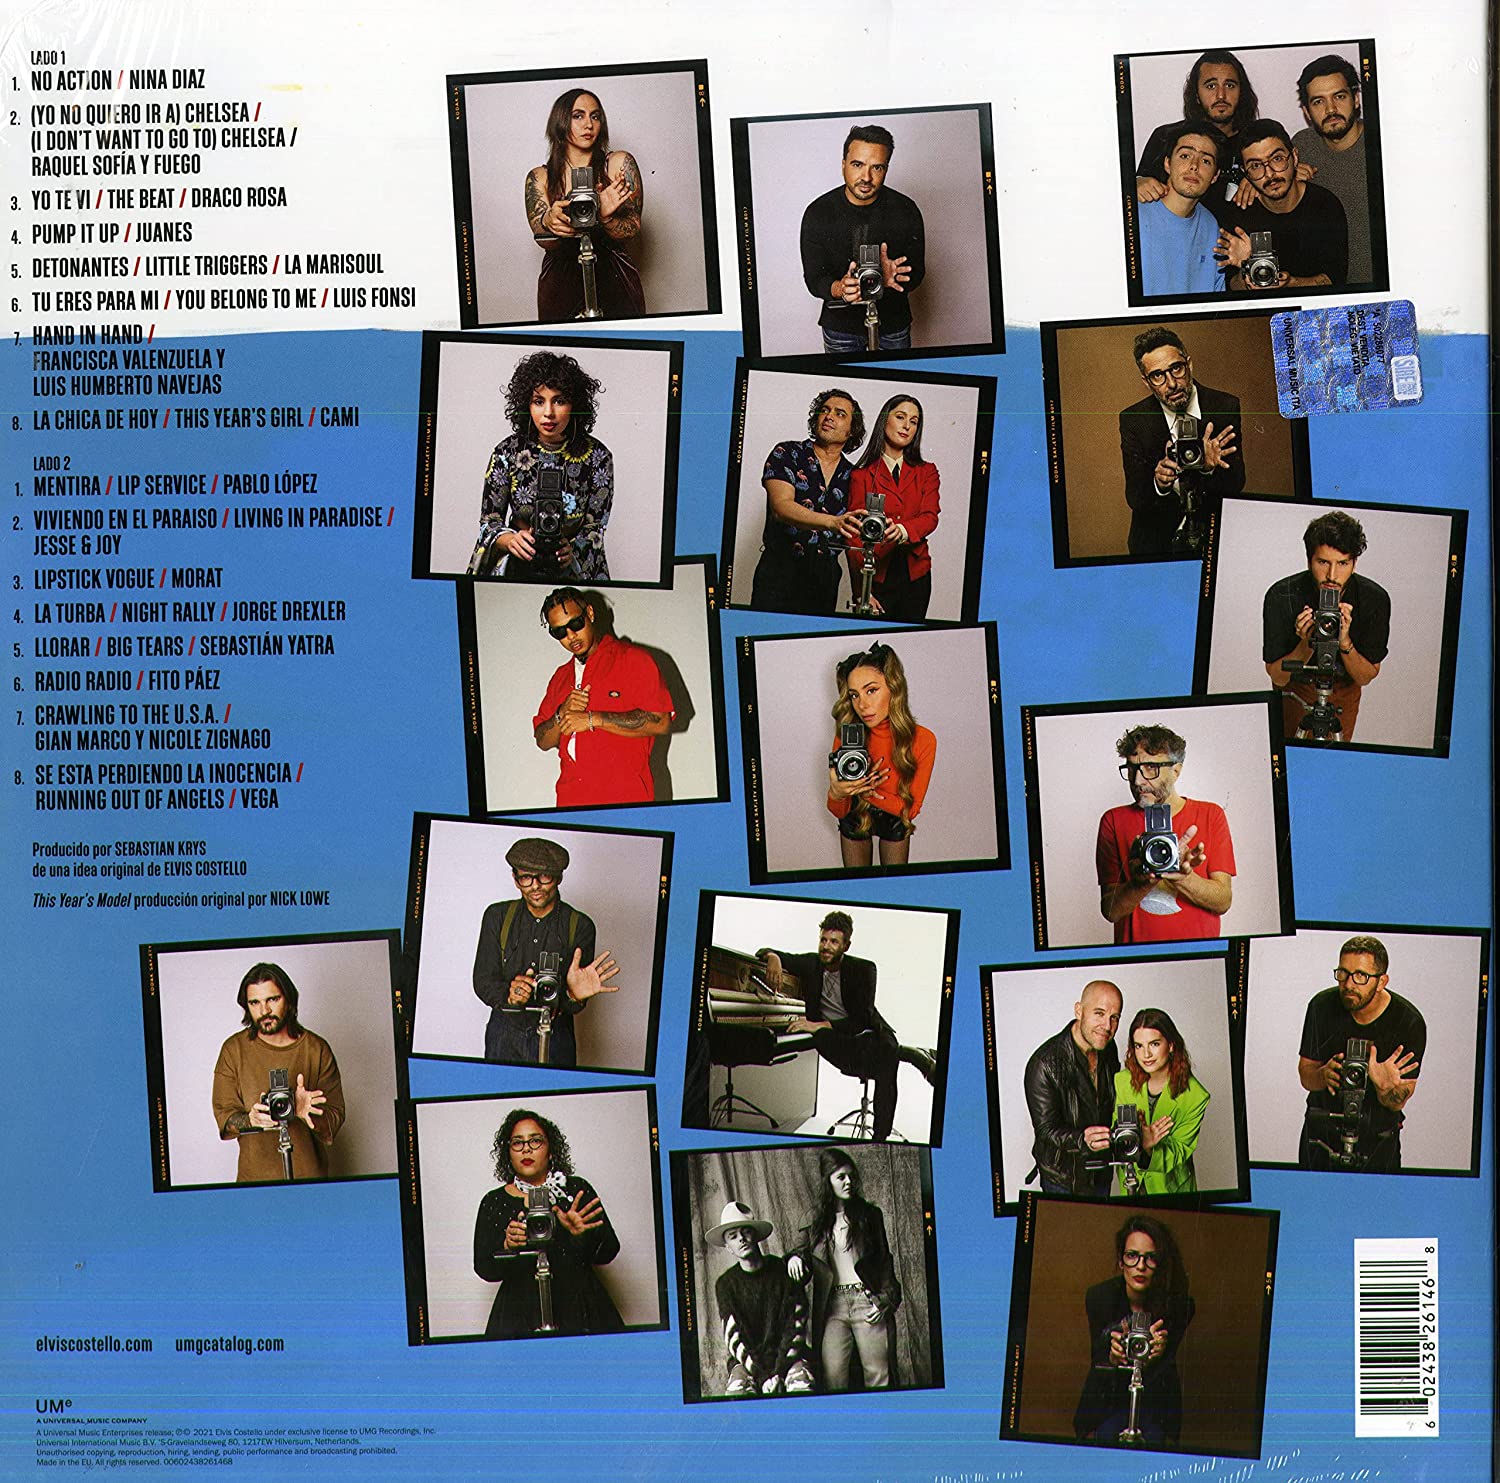 Elvis Costello (엘비스 코스텔로) - Spanish Model [LP] 